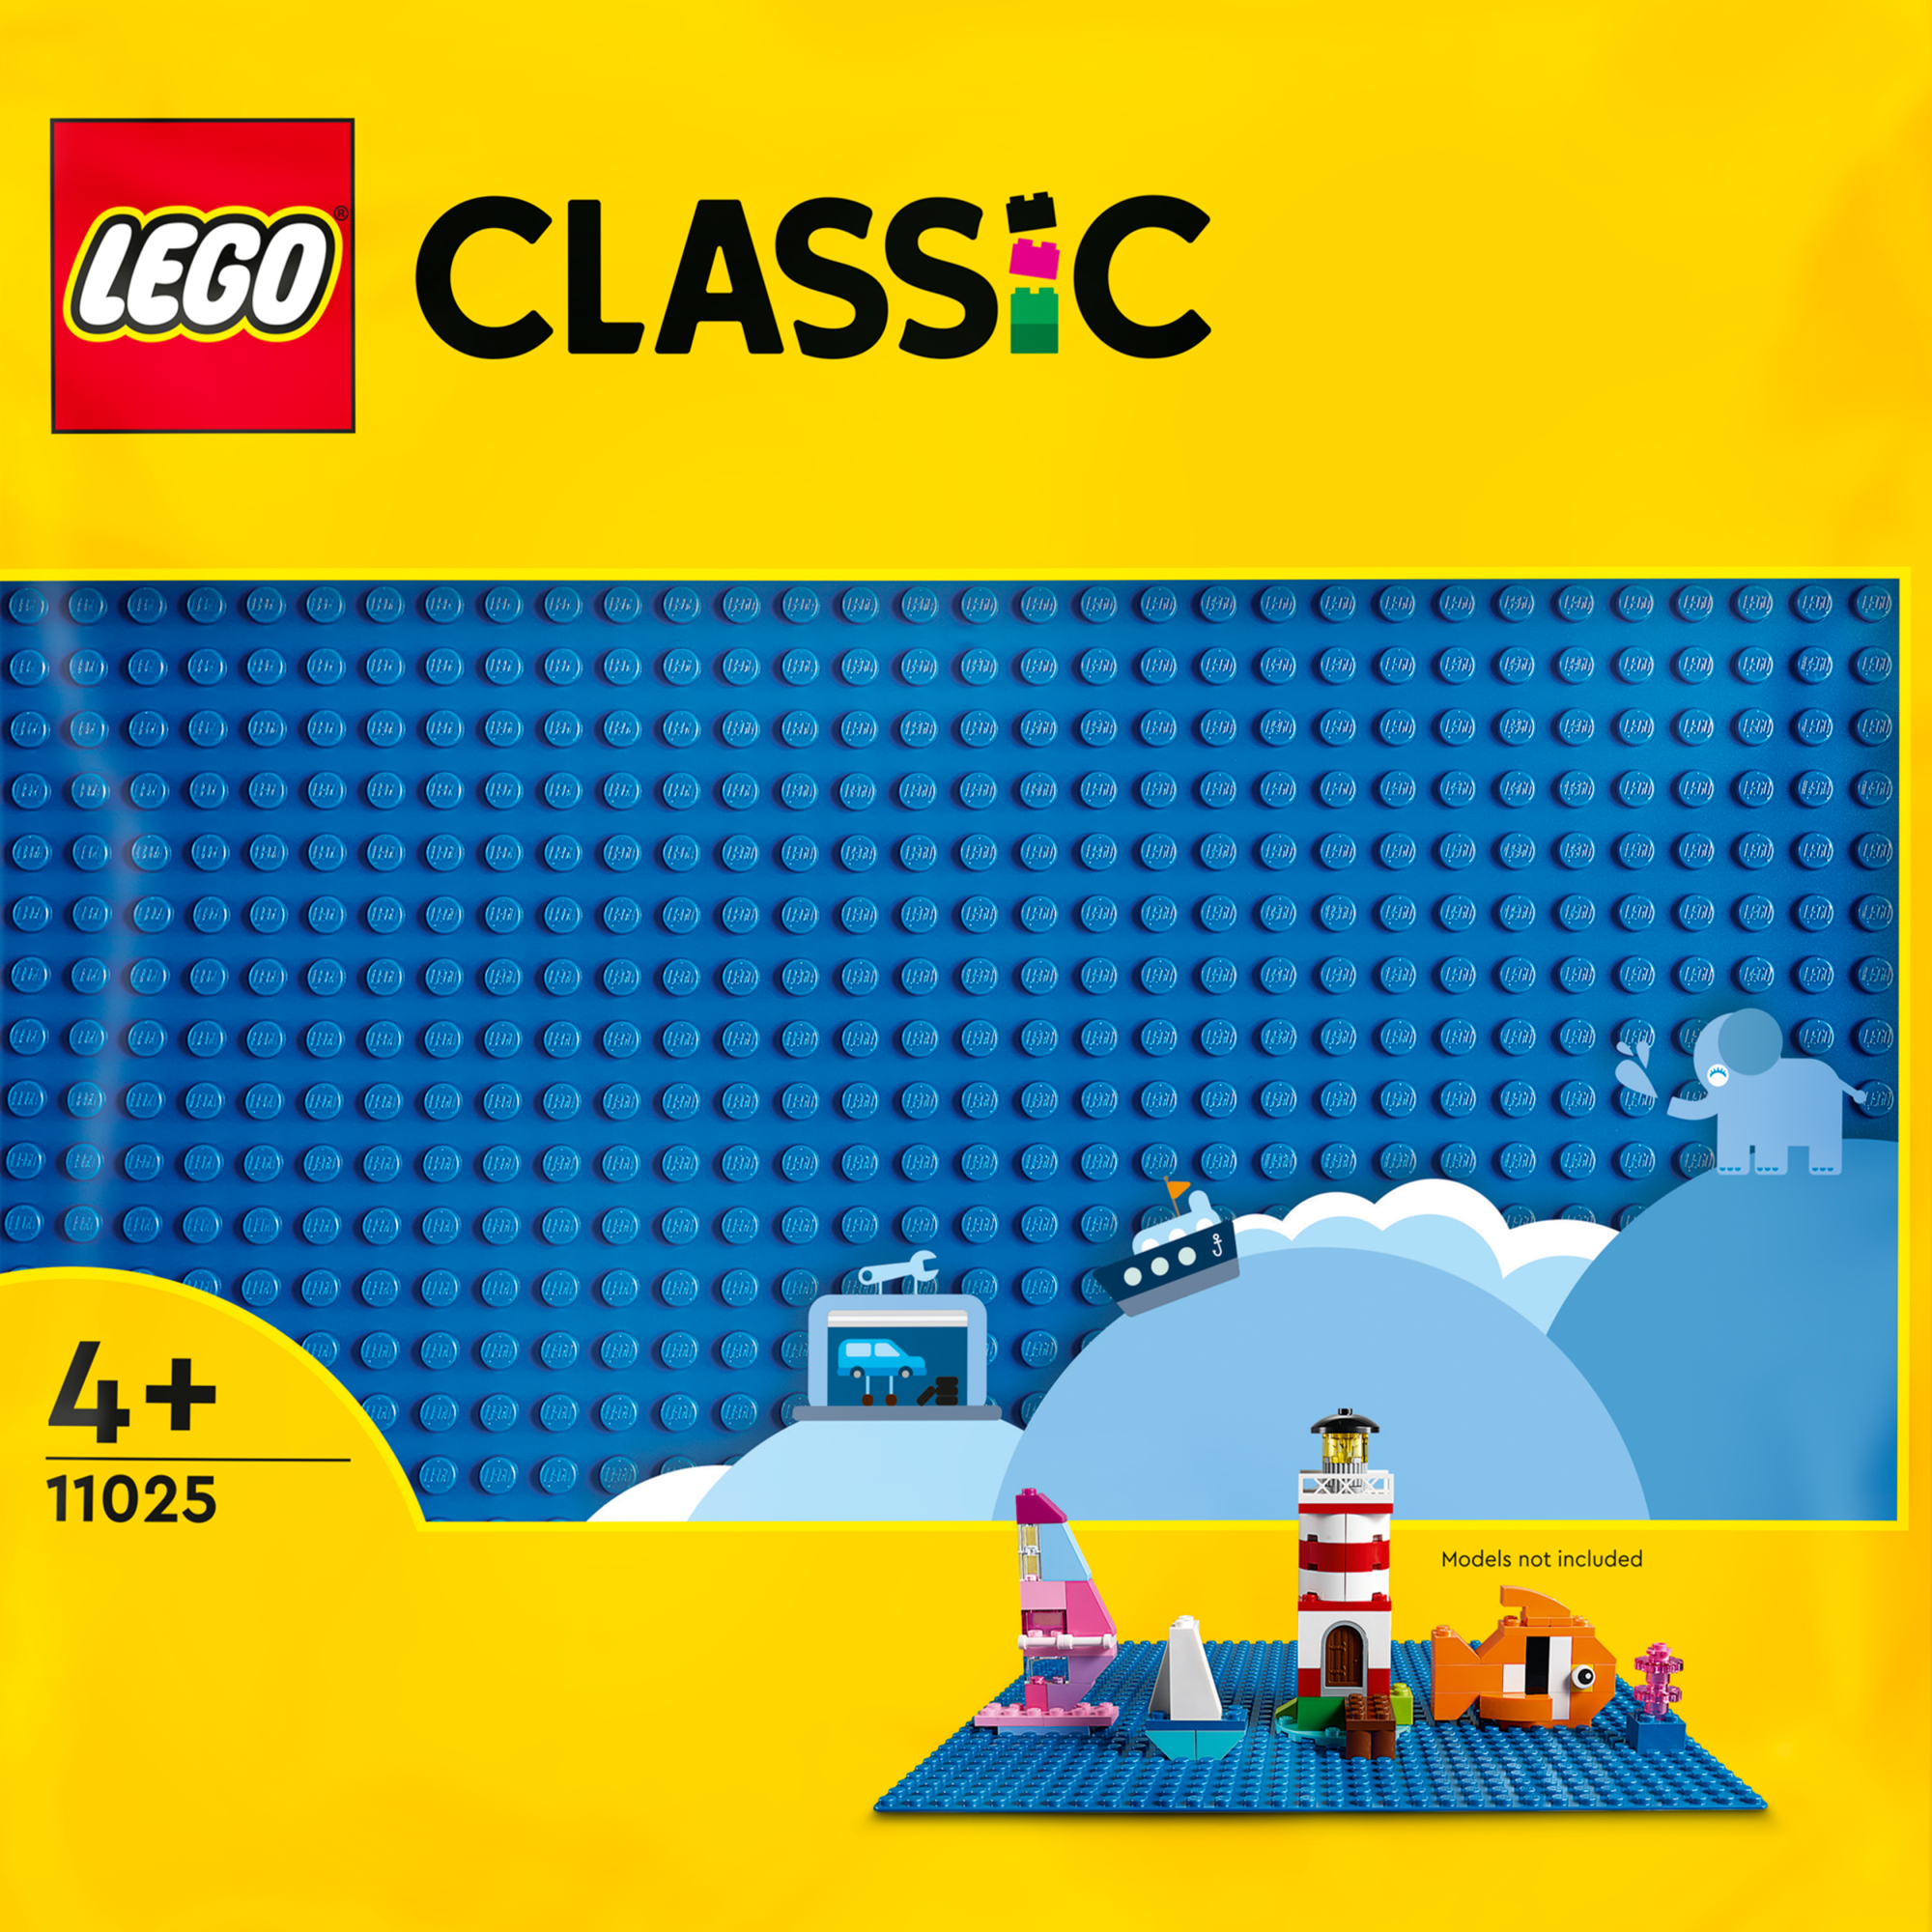 LEGO Classic - Base blu